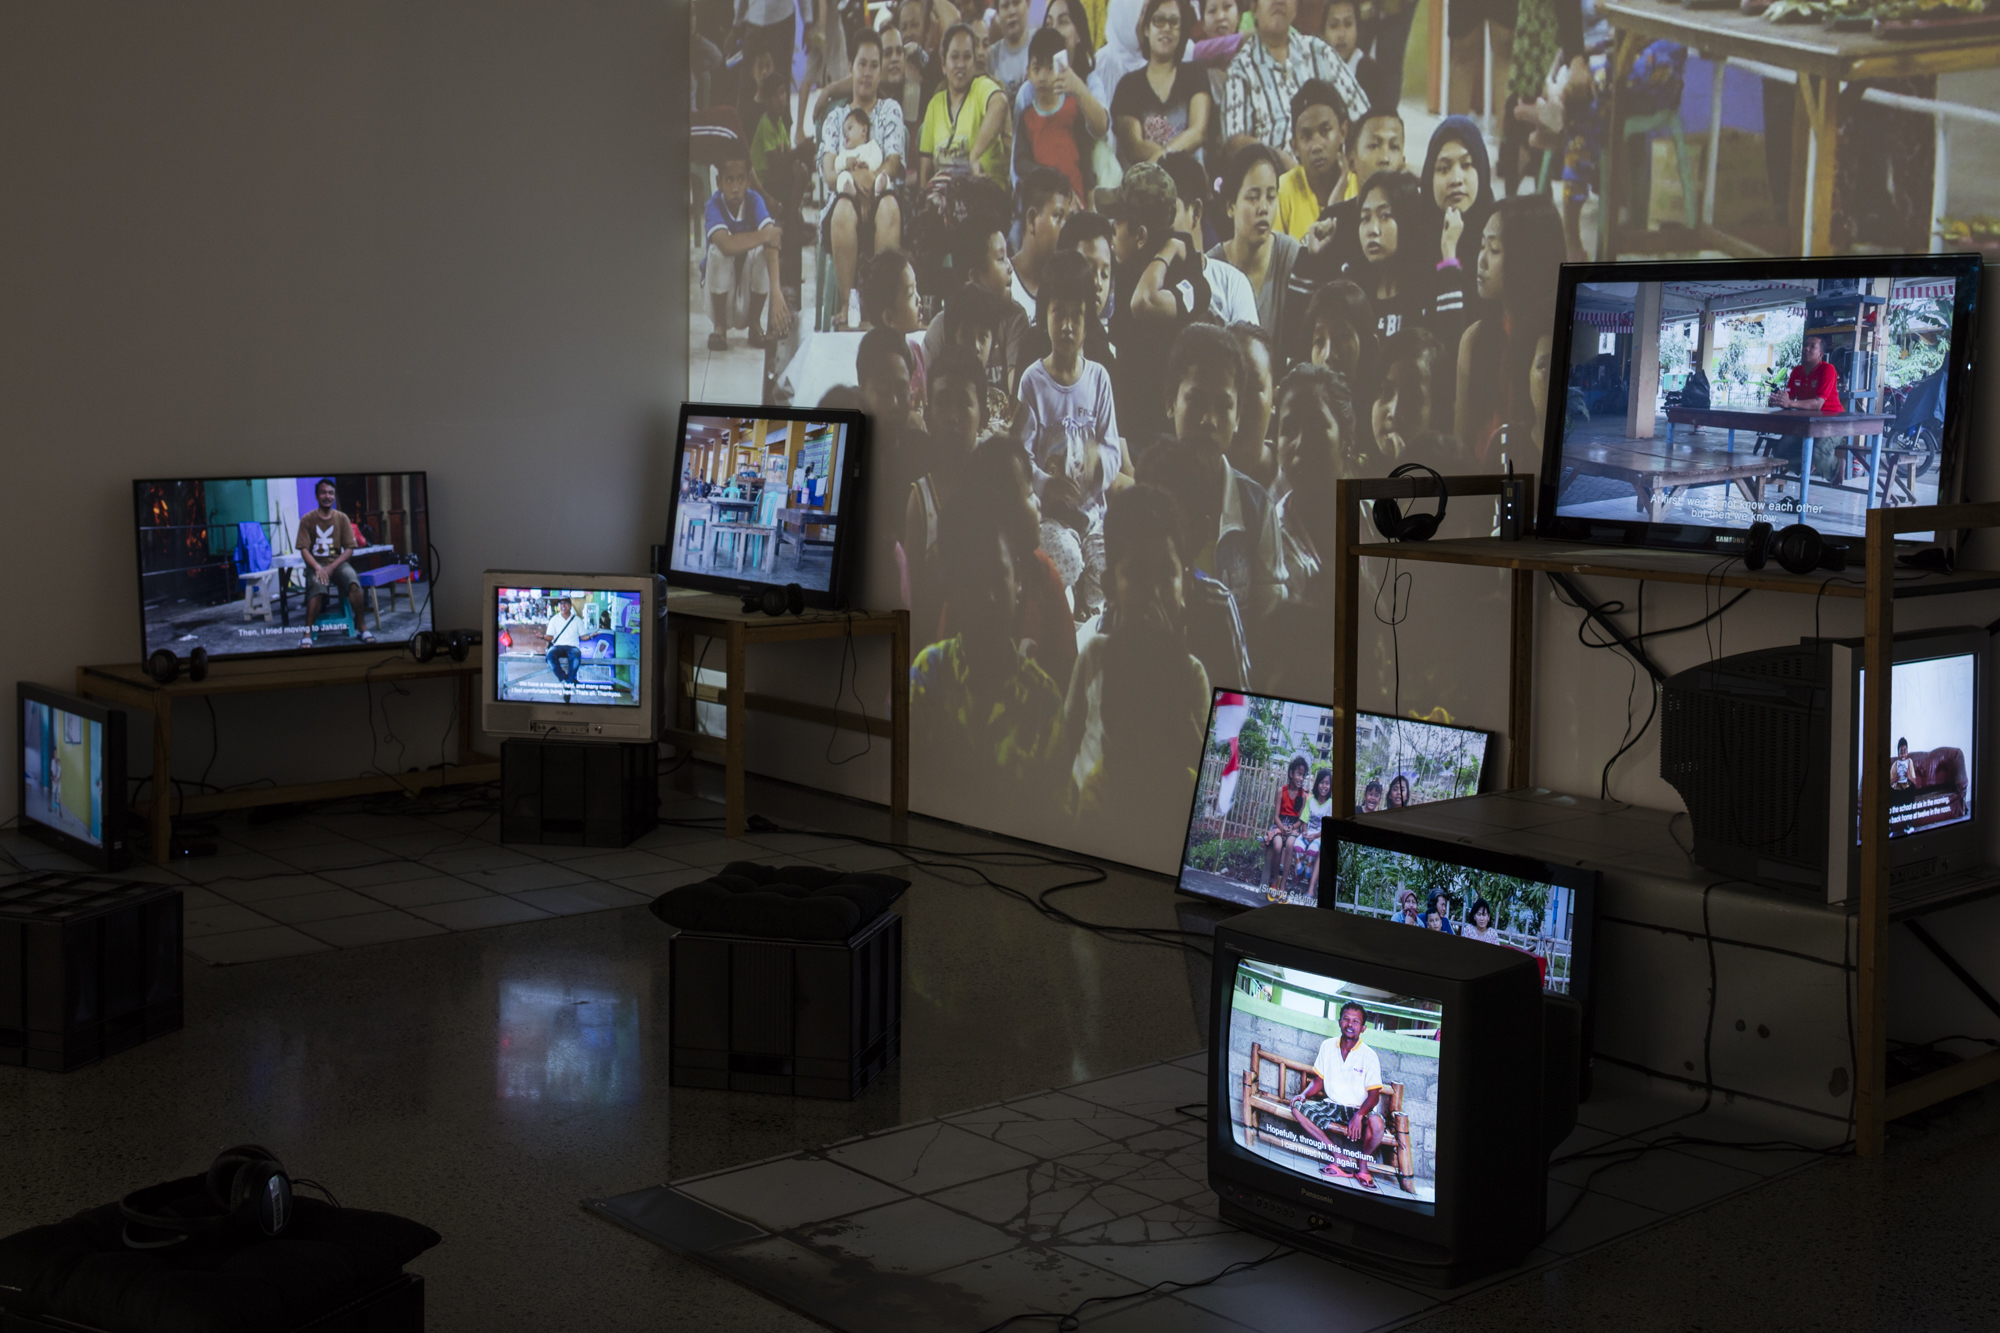 Dieneke Jansen, Marunda: Dwelling on the Stoep (2015) Video projection, duration 35:40 Nine videos on monitors, duration varies from 5:04 – 16:52